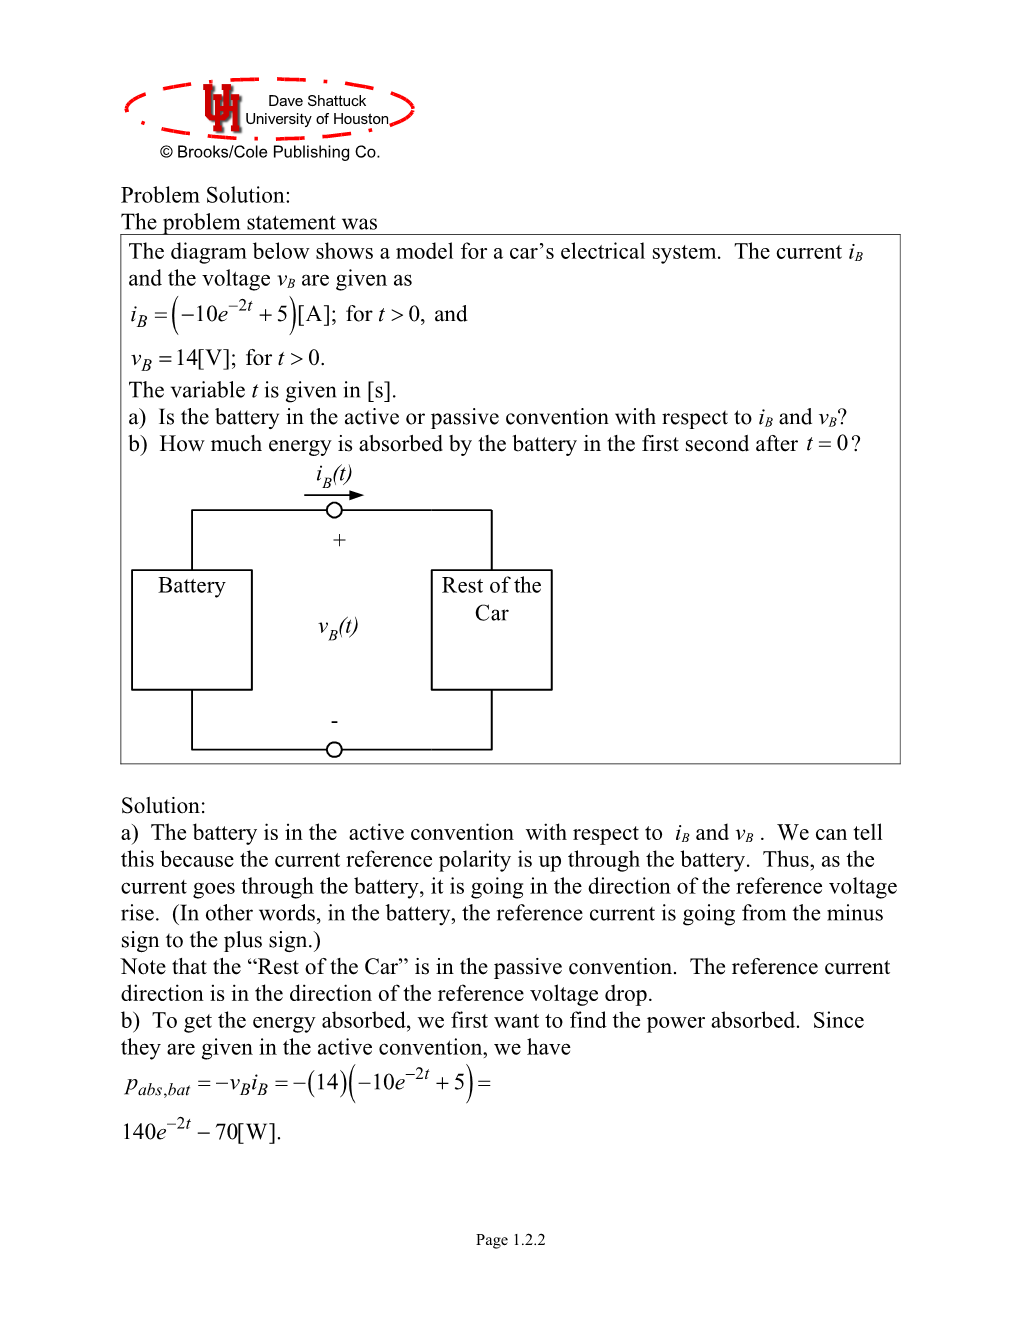 Practice Examination Module 1 Problem 2